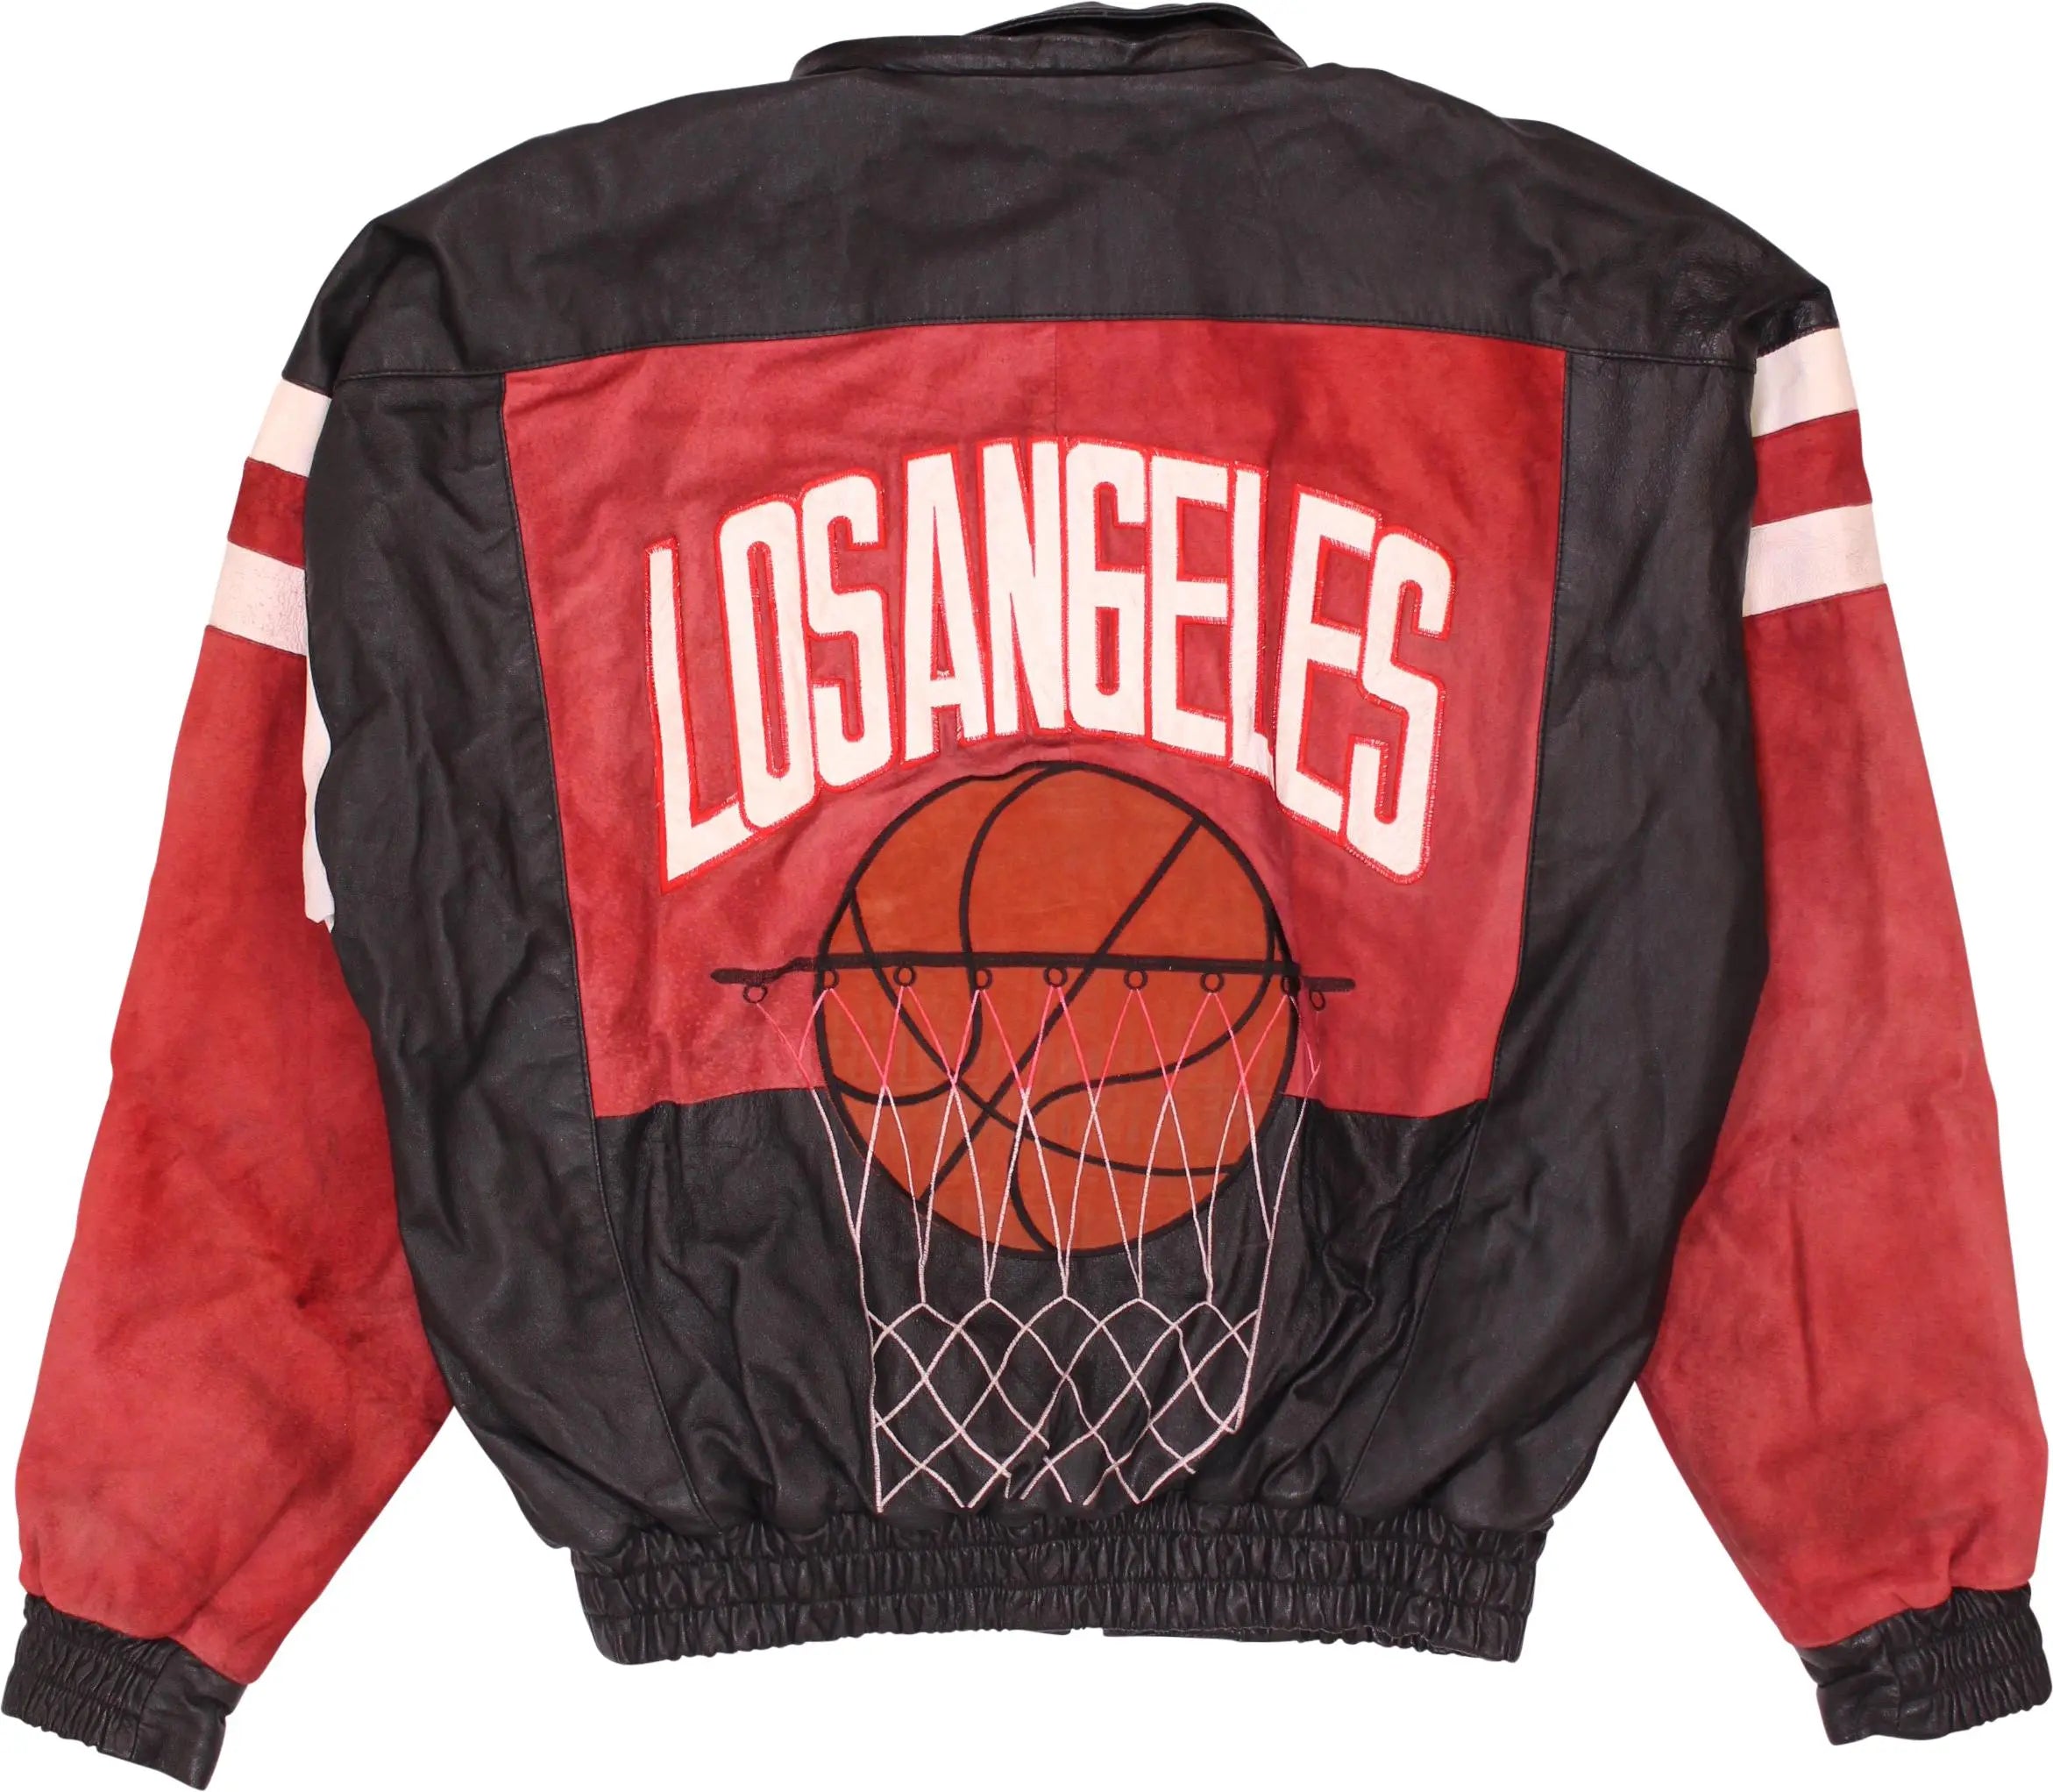 Cosa Nova - Vintage Leather Los Angeles Basketball Jacket- ThriftTale.com - Vintage and second handclothing